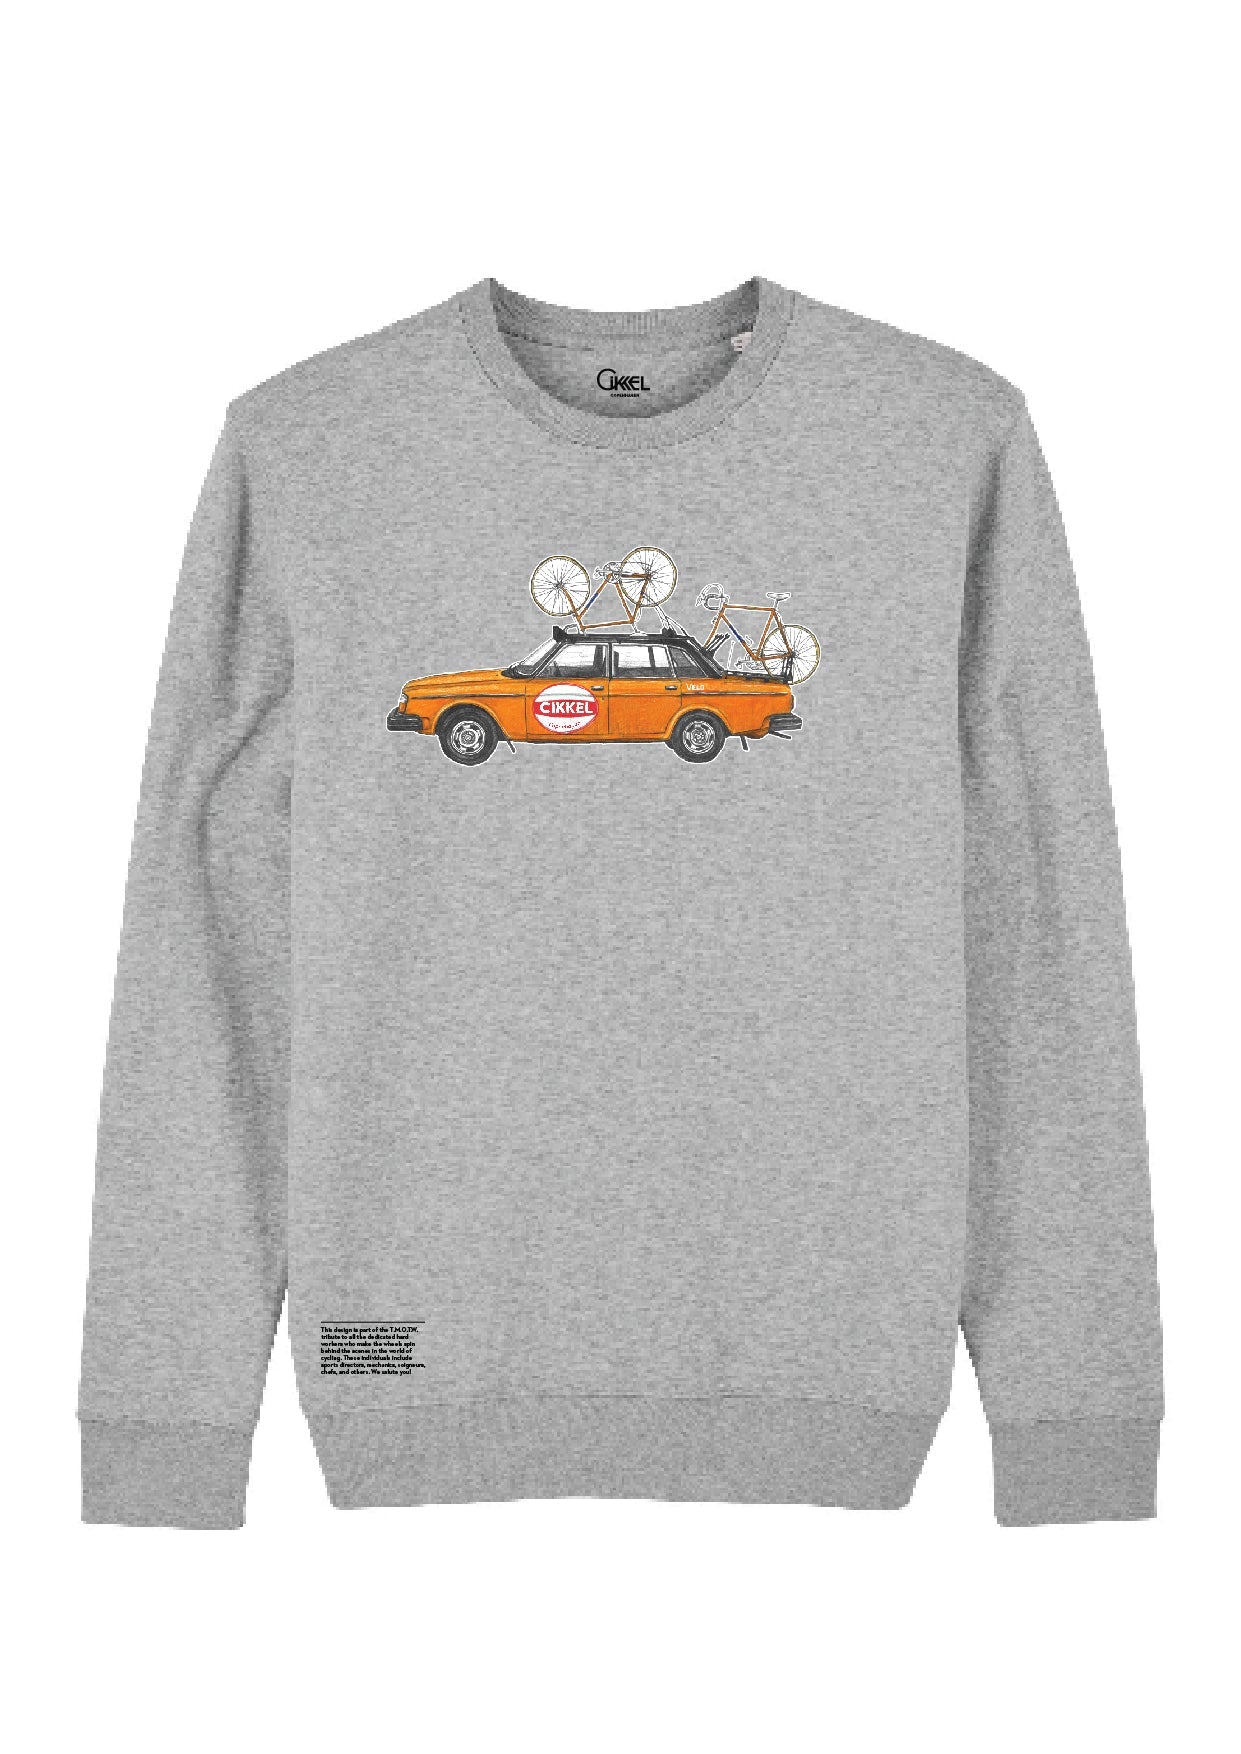 Cikkel Copenhagen - Orange 1975 Cycling Team Car - Sweatshirt